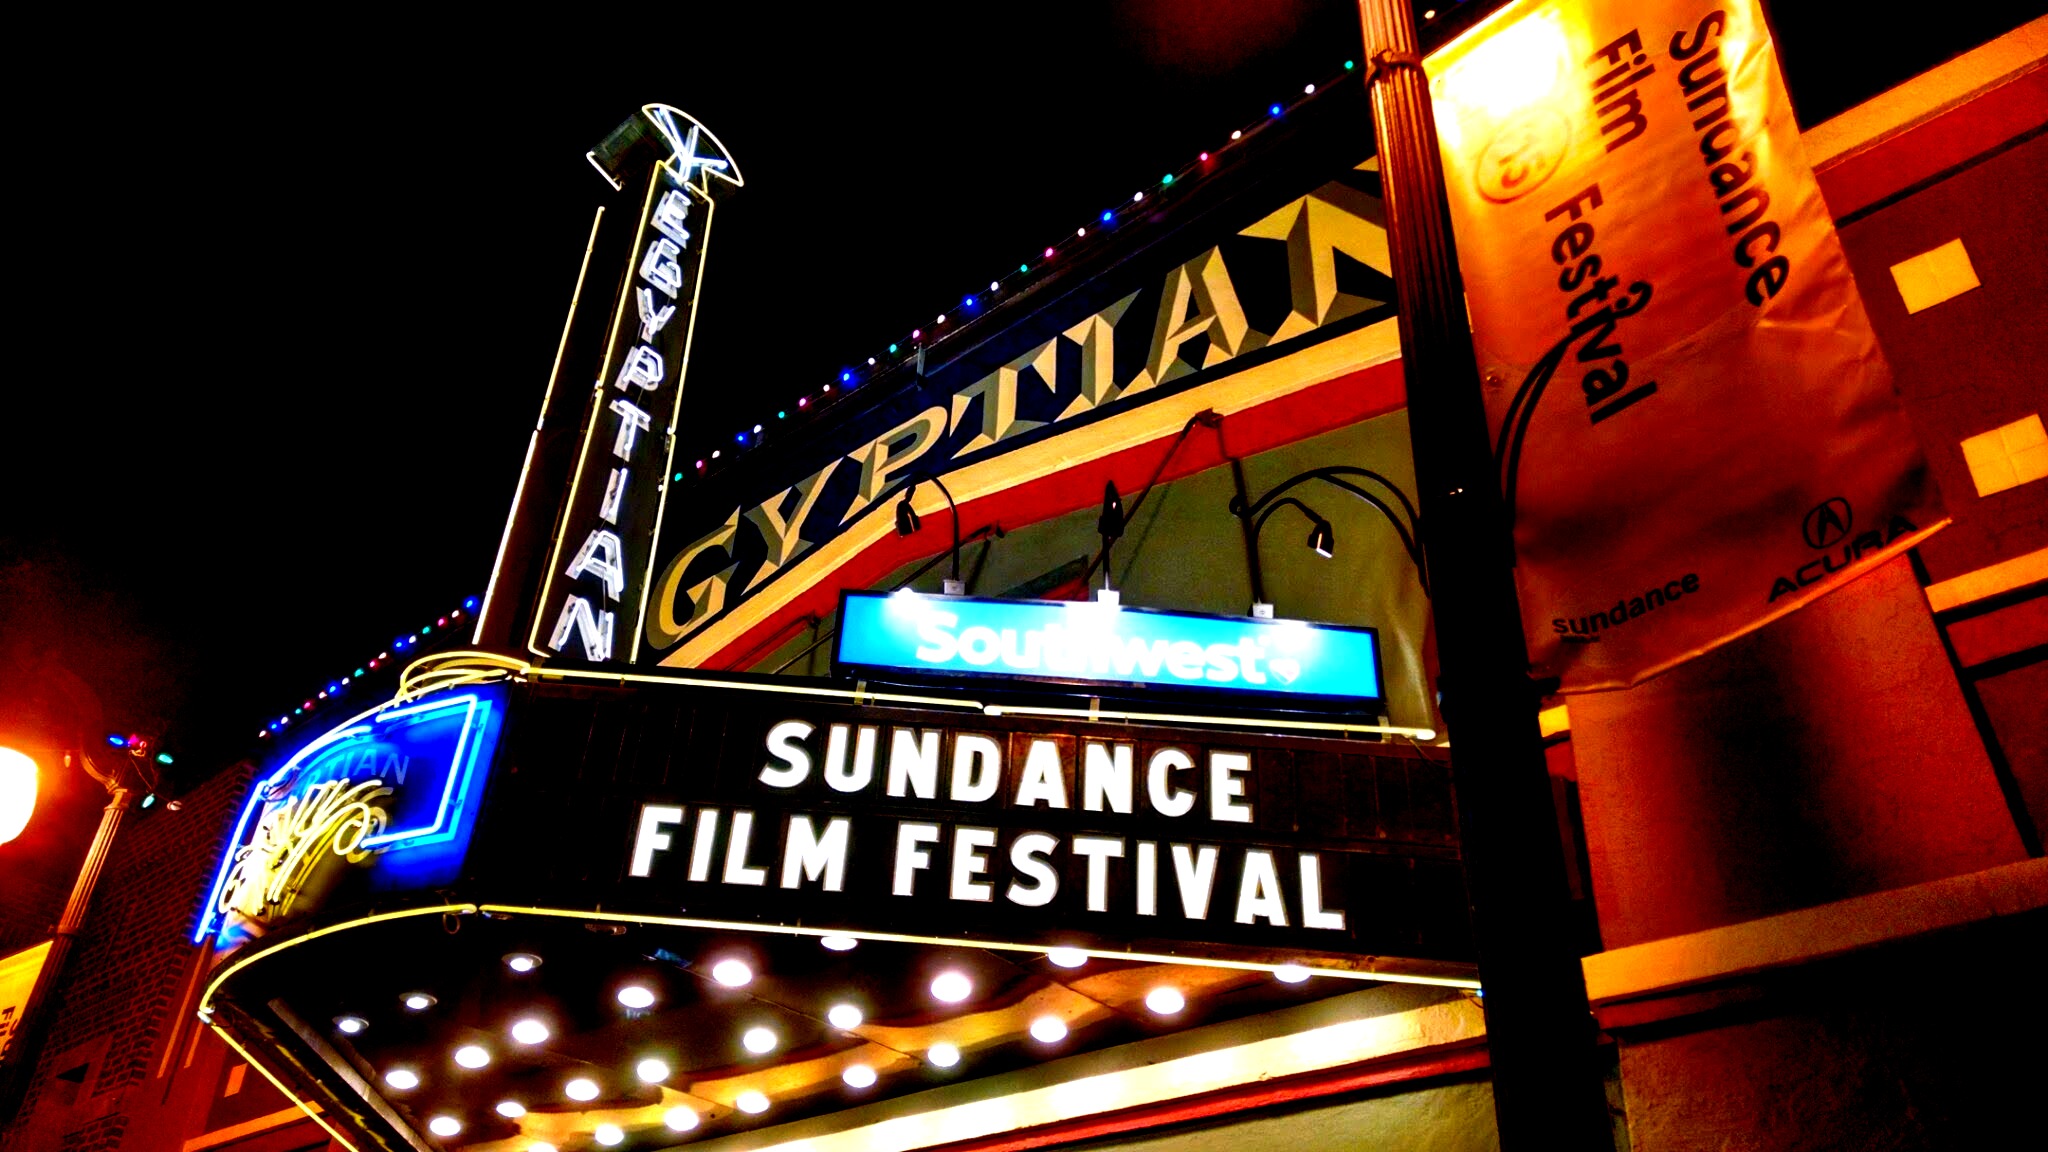 Sundance film festival theater